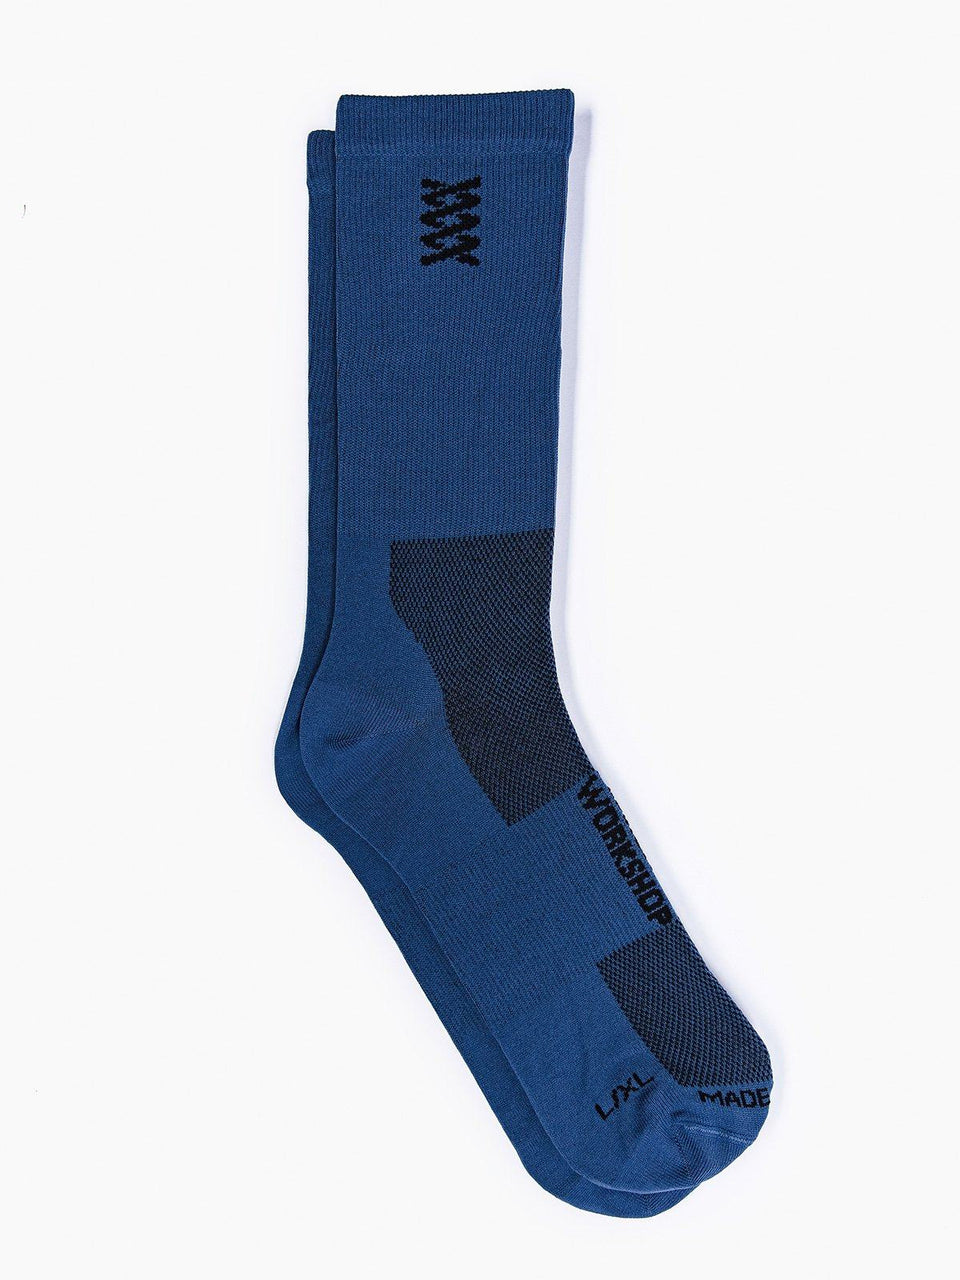 Mission Pro Socks